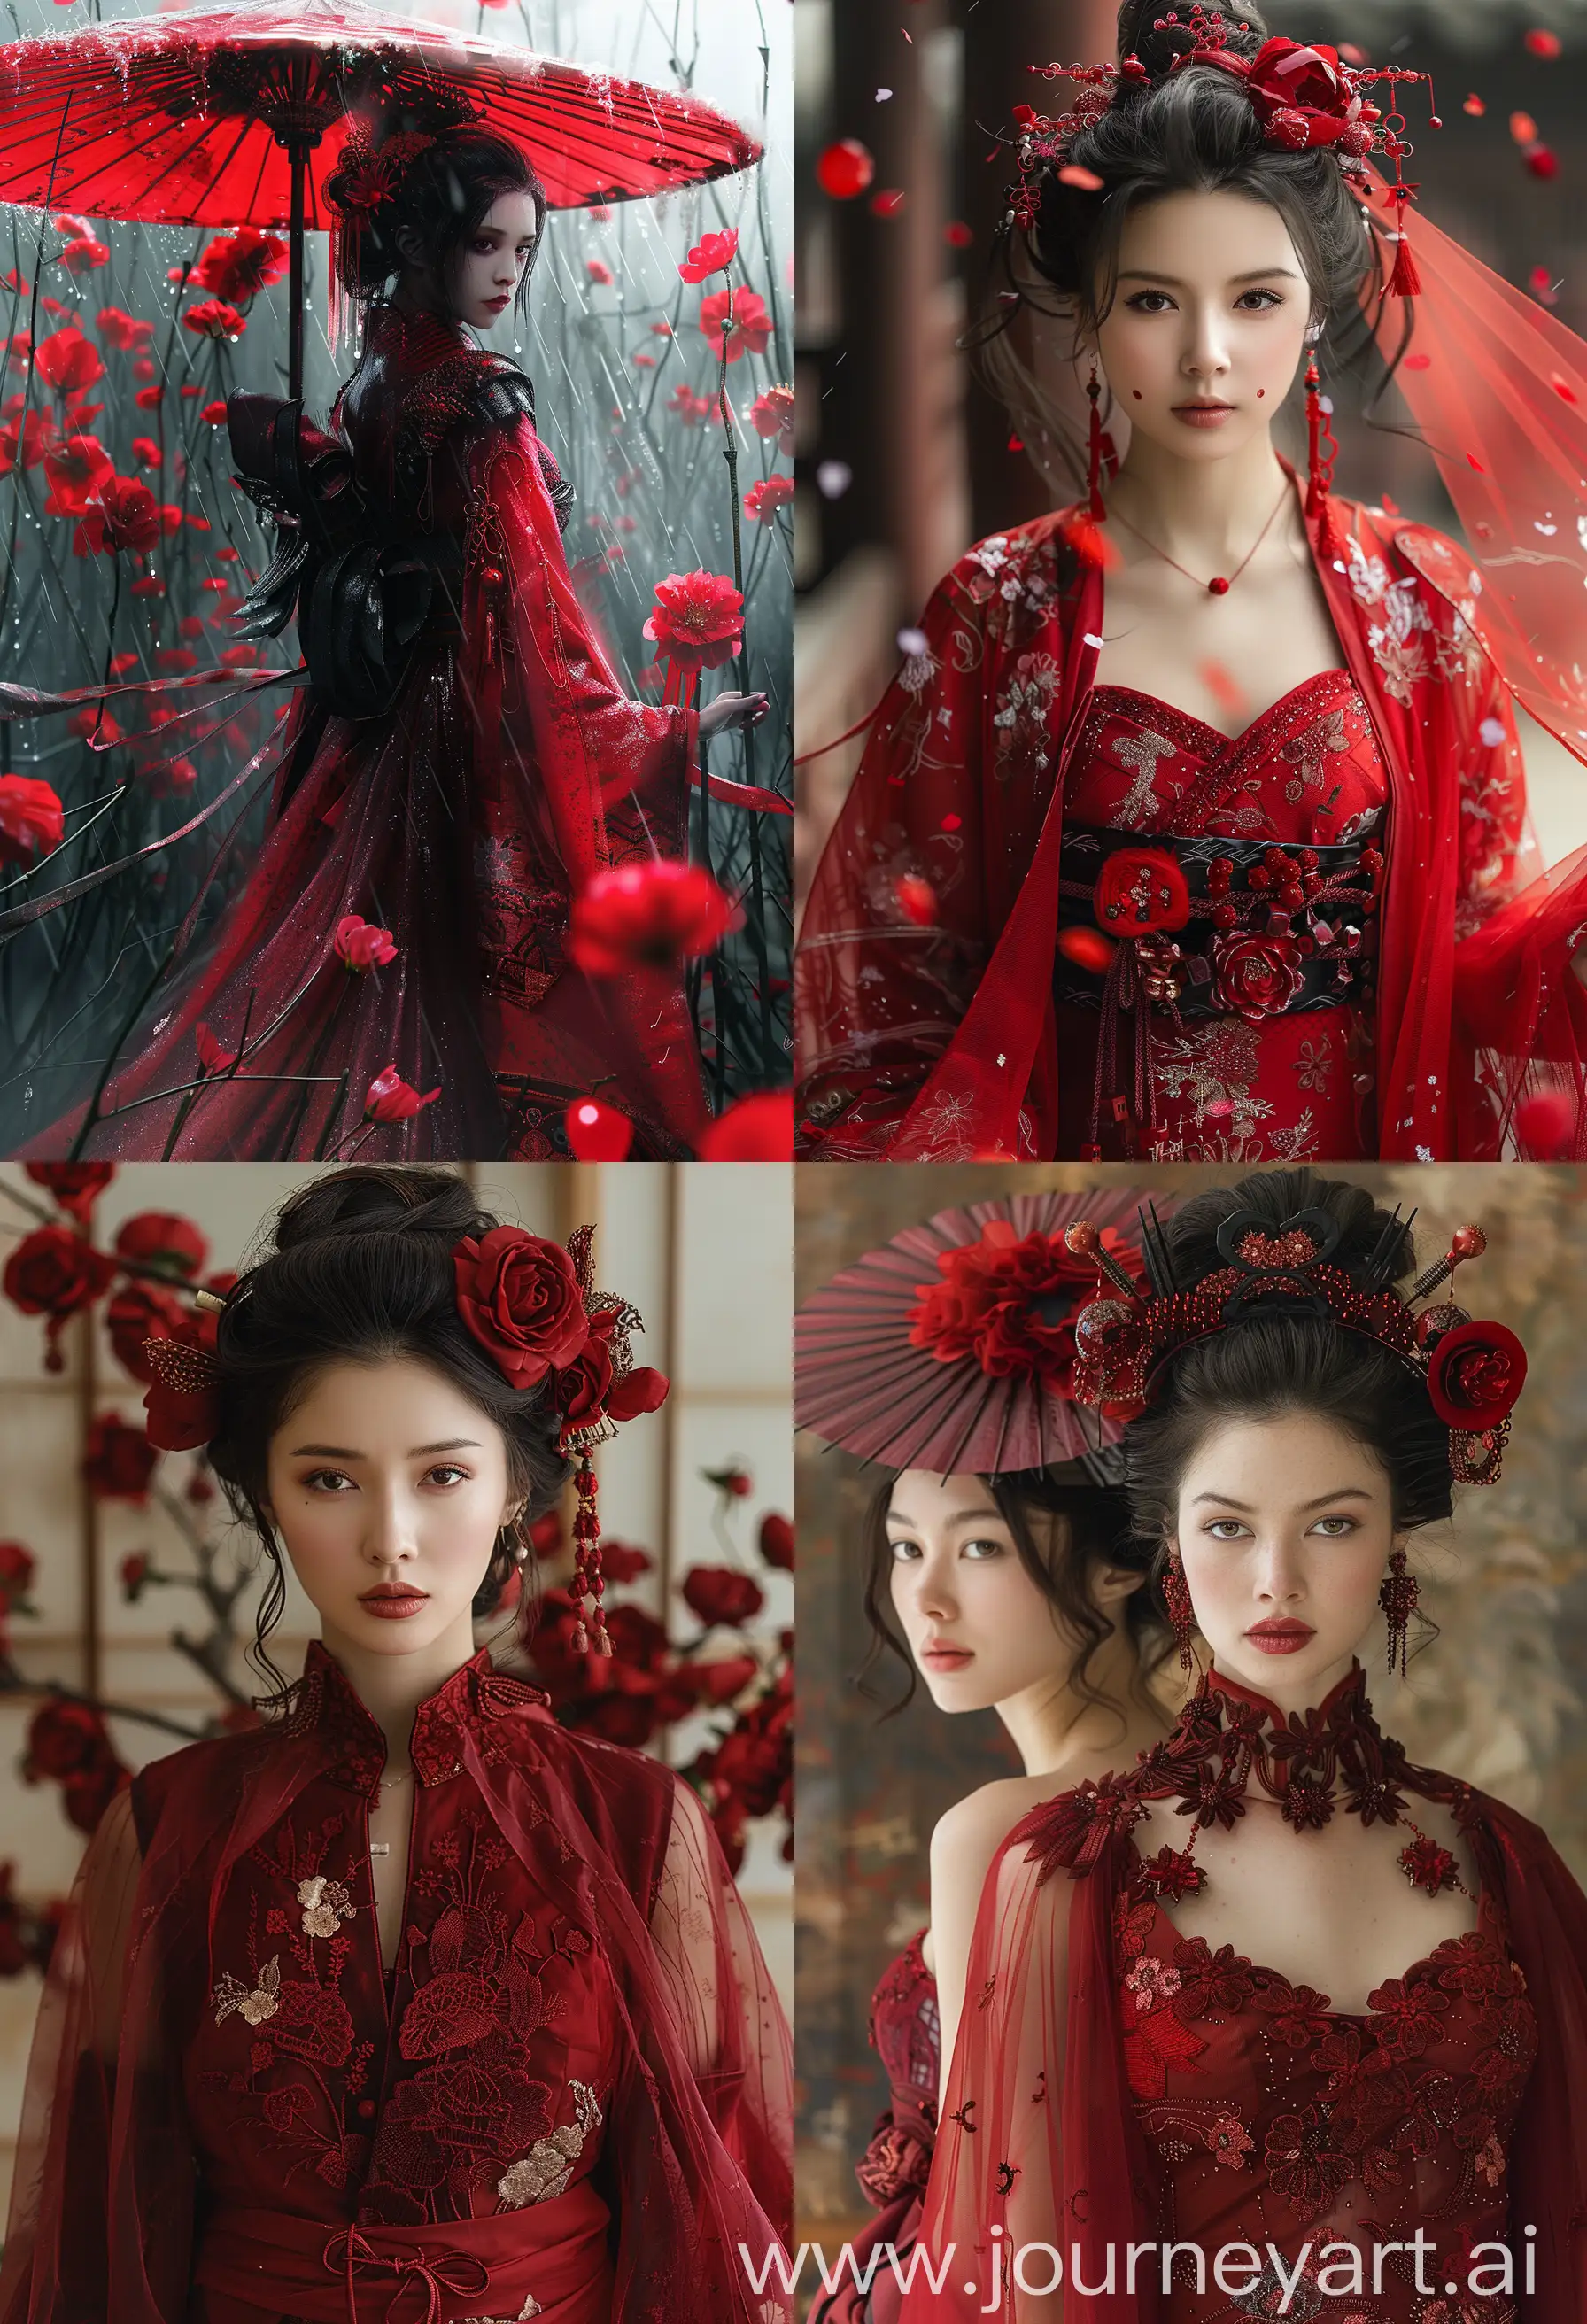 raiden shogun with a pure red wedding dress --s 750 --ar 13:19